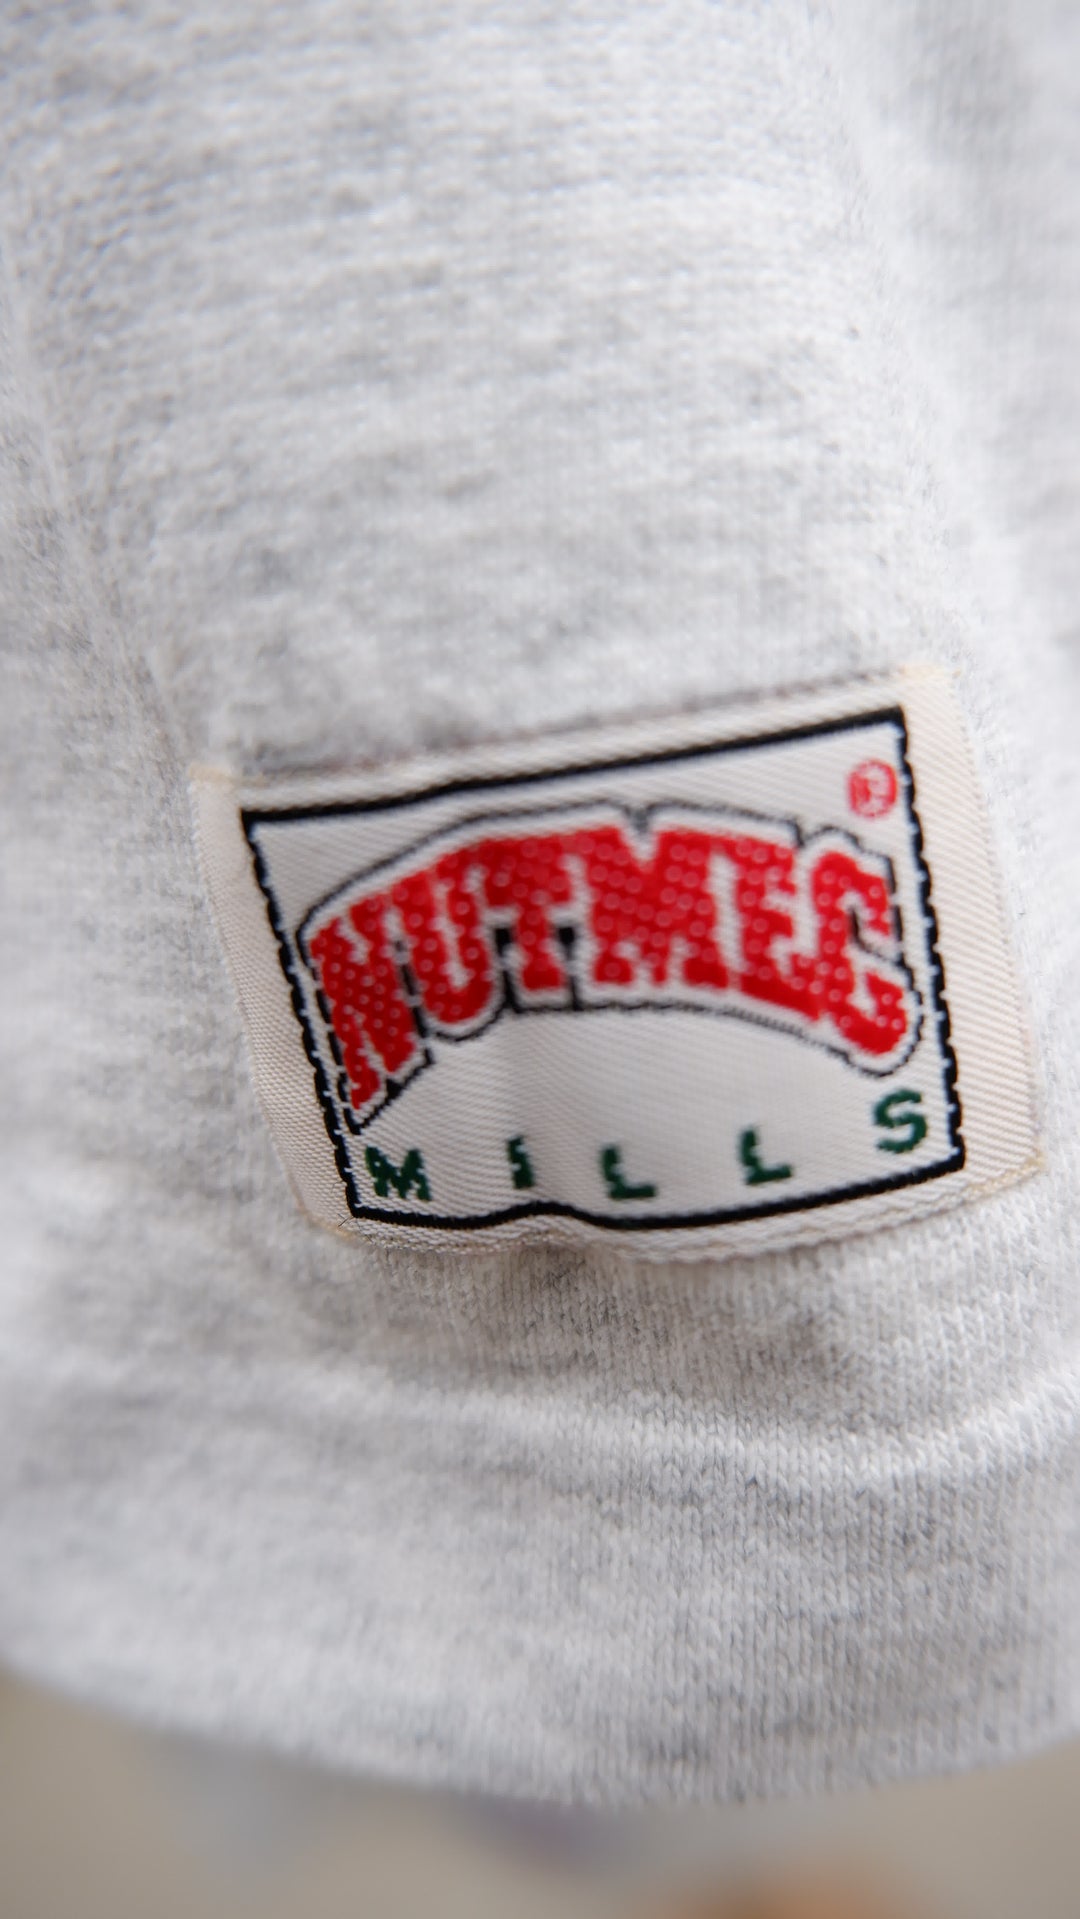 San Francisco 49ers sweatshirt by Lee Sports/ Nutmeg Mills inc